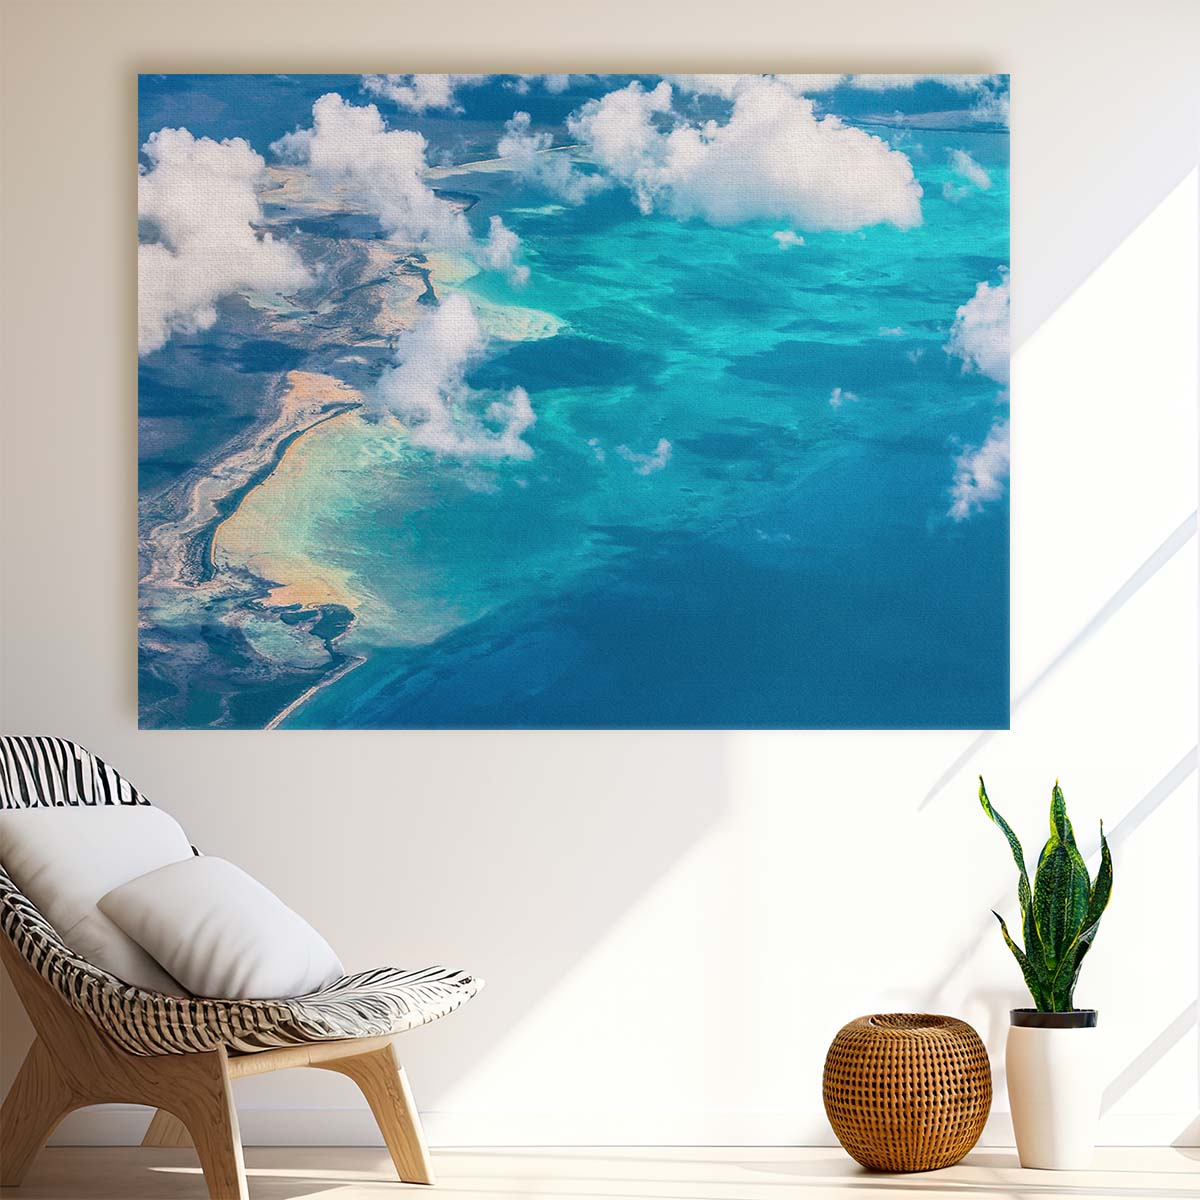 Caribbean Beach & Ocean Aerial View Wall Art by Luxuriance Designs. Made in USA.